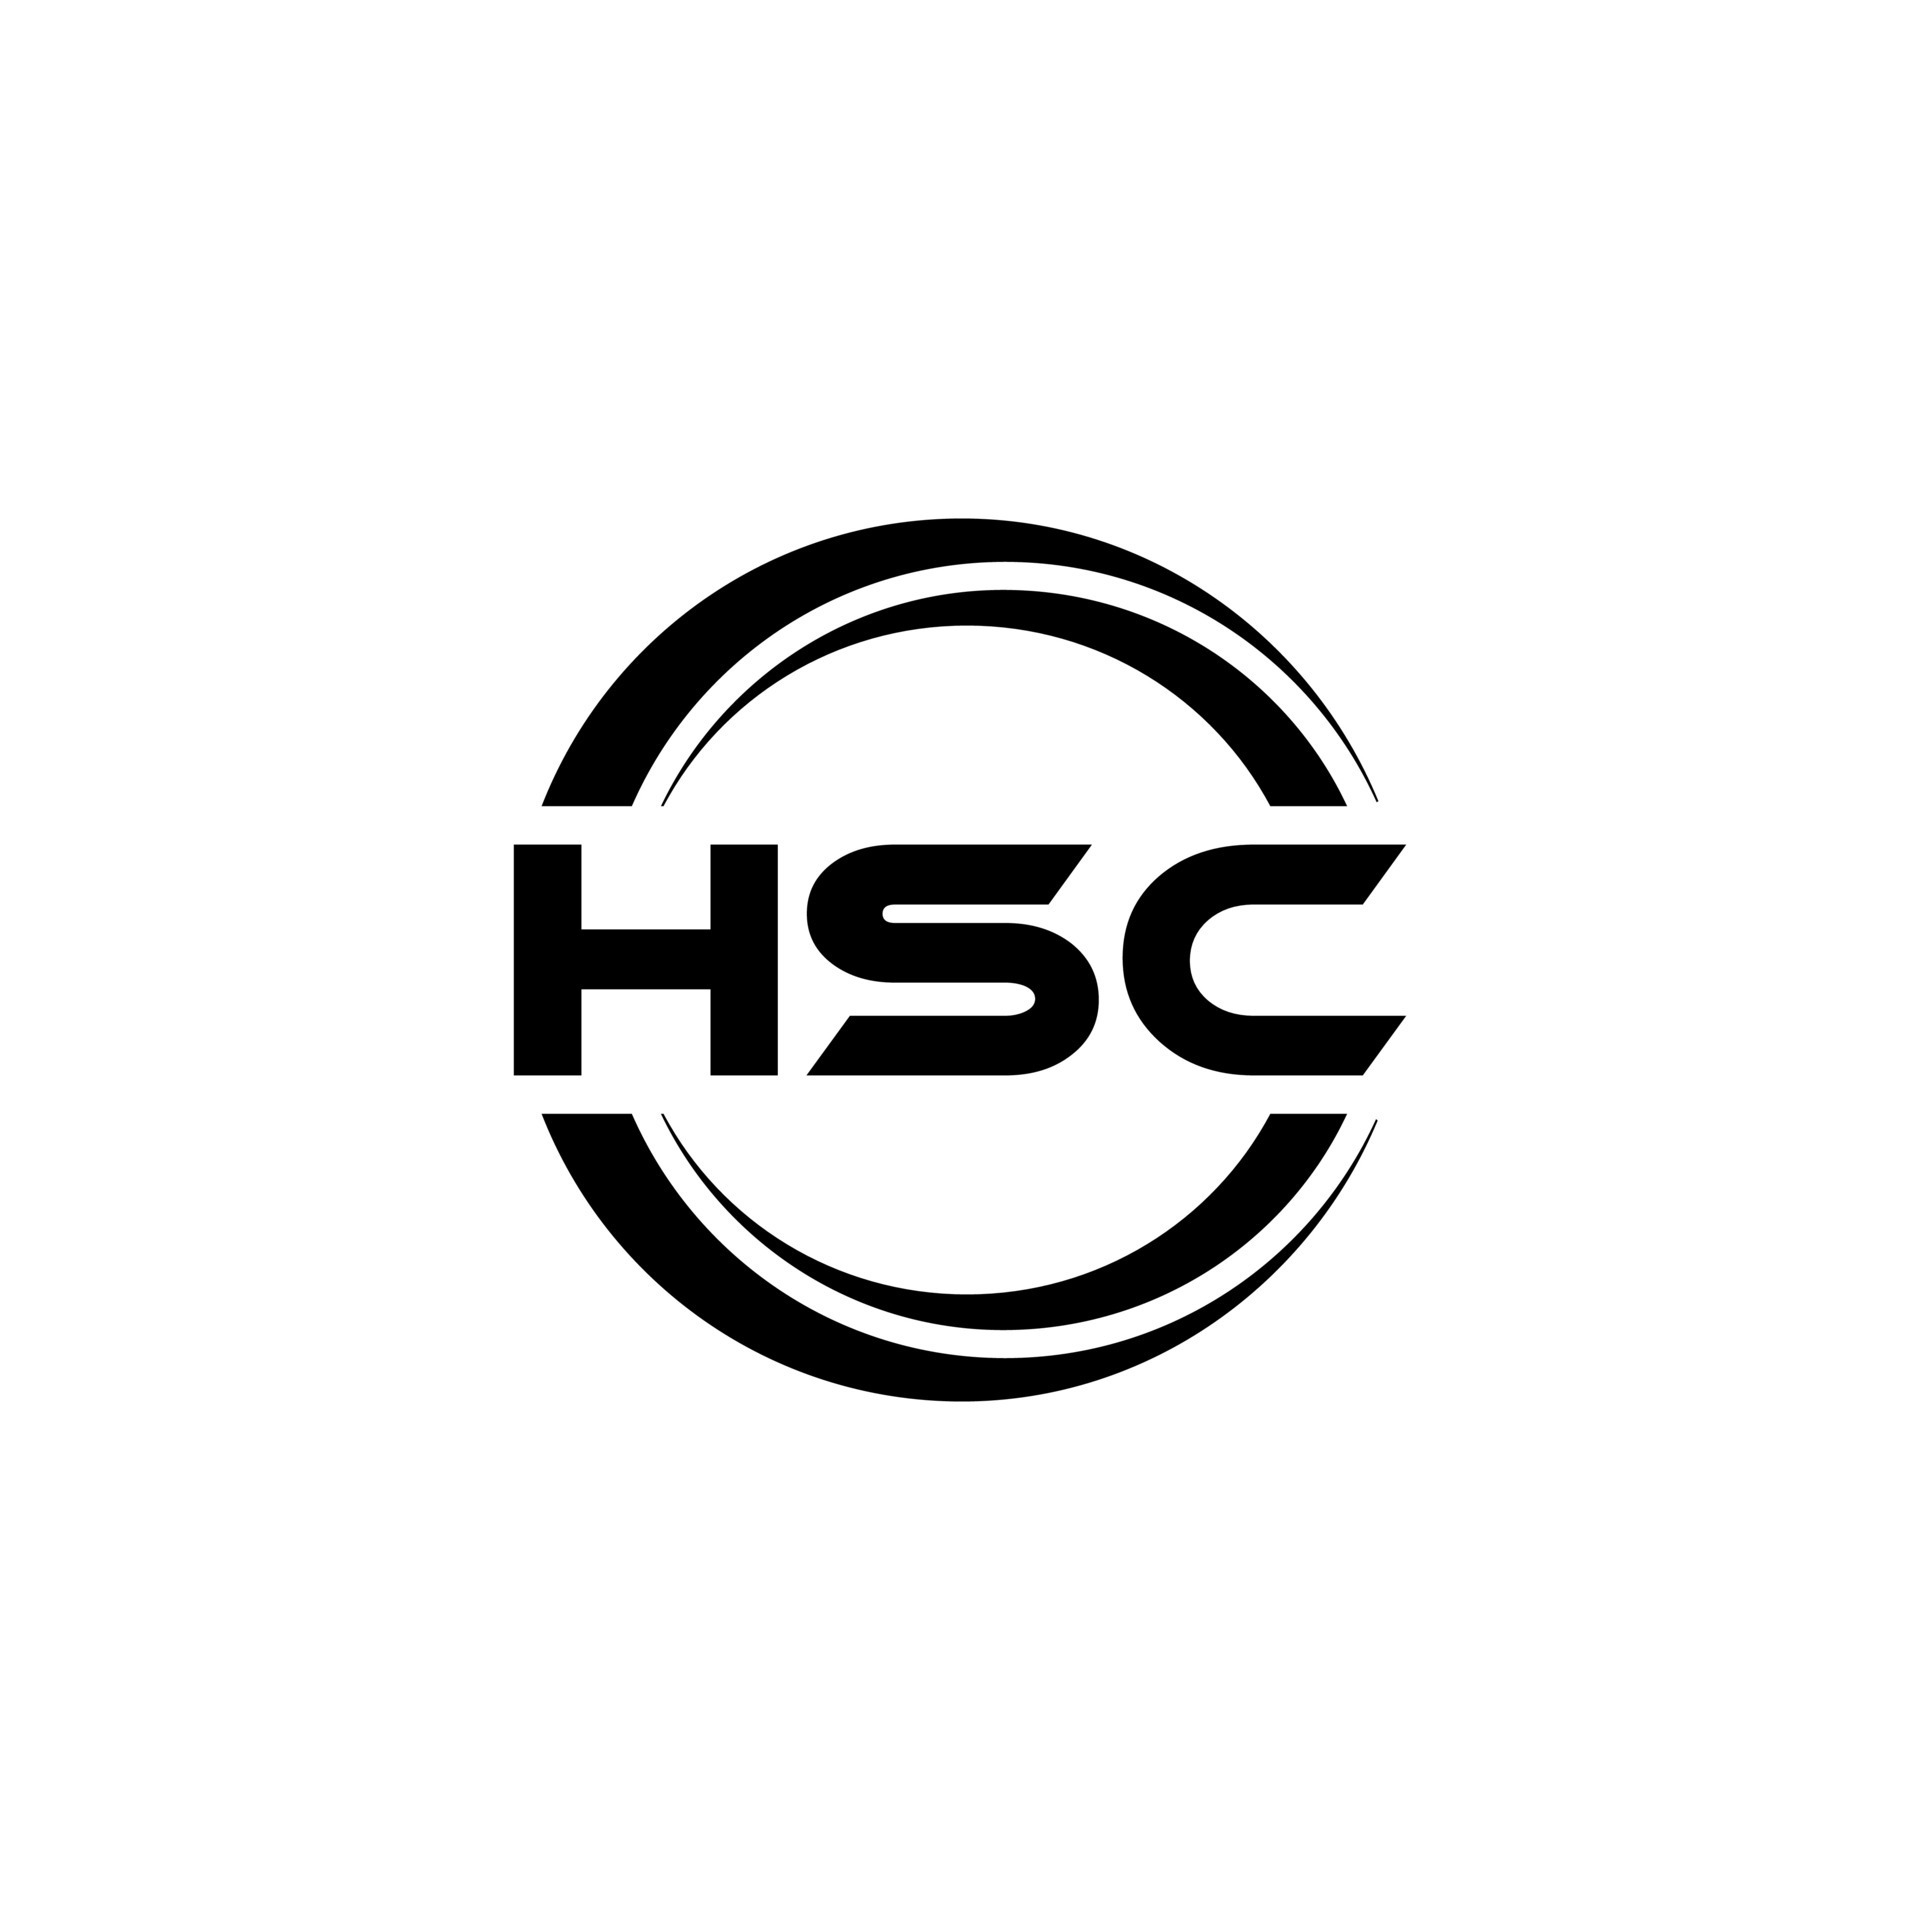 HSC Logo Design, Inspiration for a Unique Identity. Modern Elegance and ...